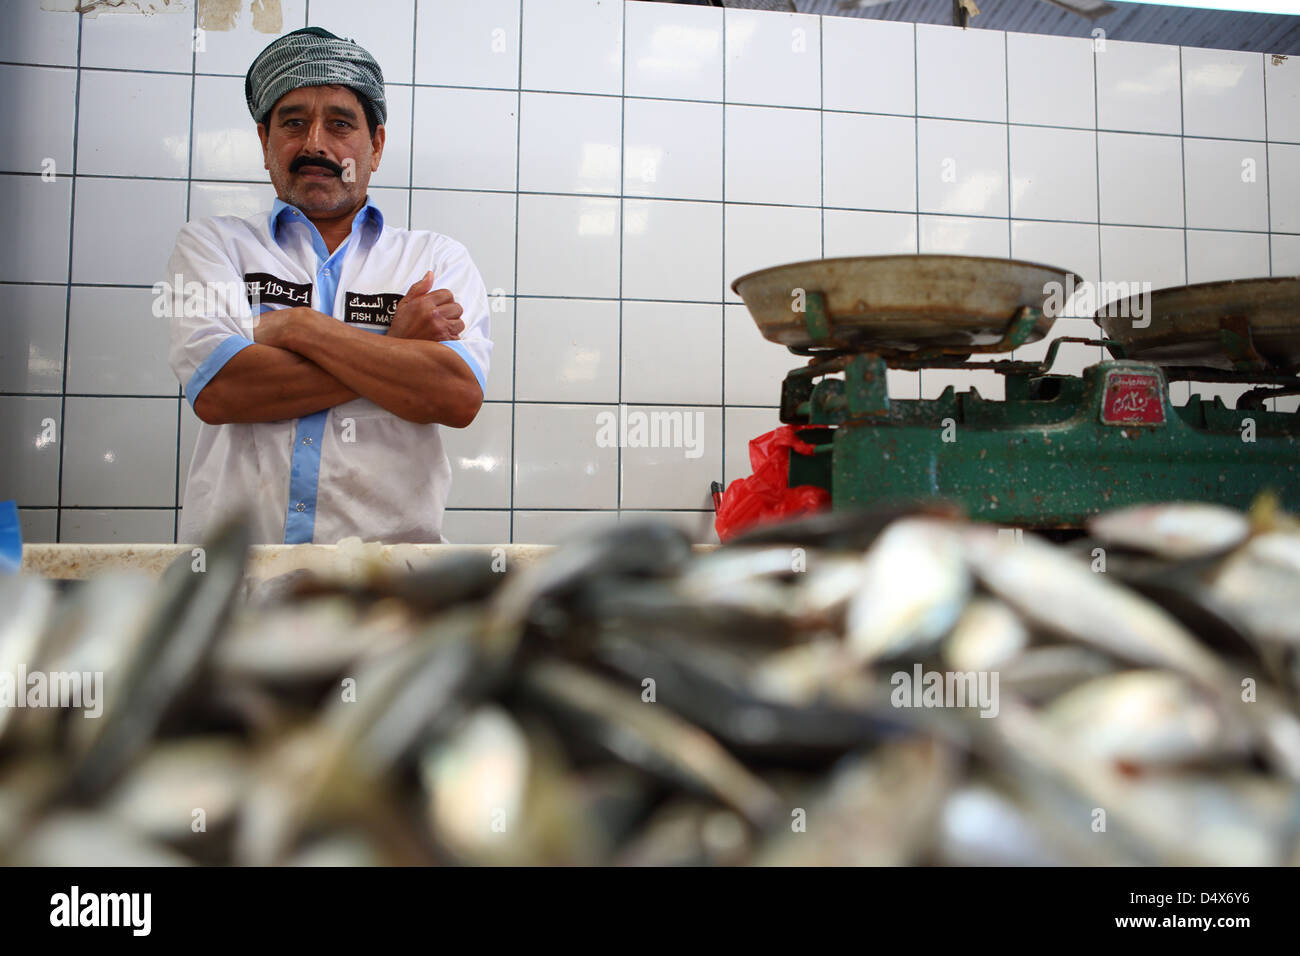 Portrait of man at fish market, Dubai, United Arab Emirates Stock Photo